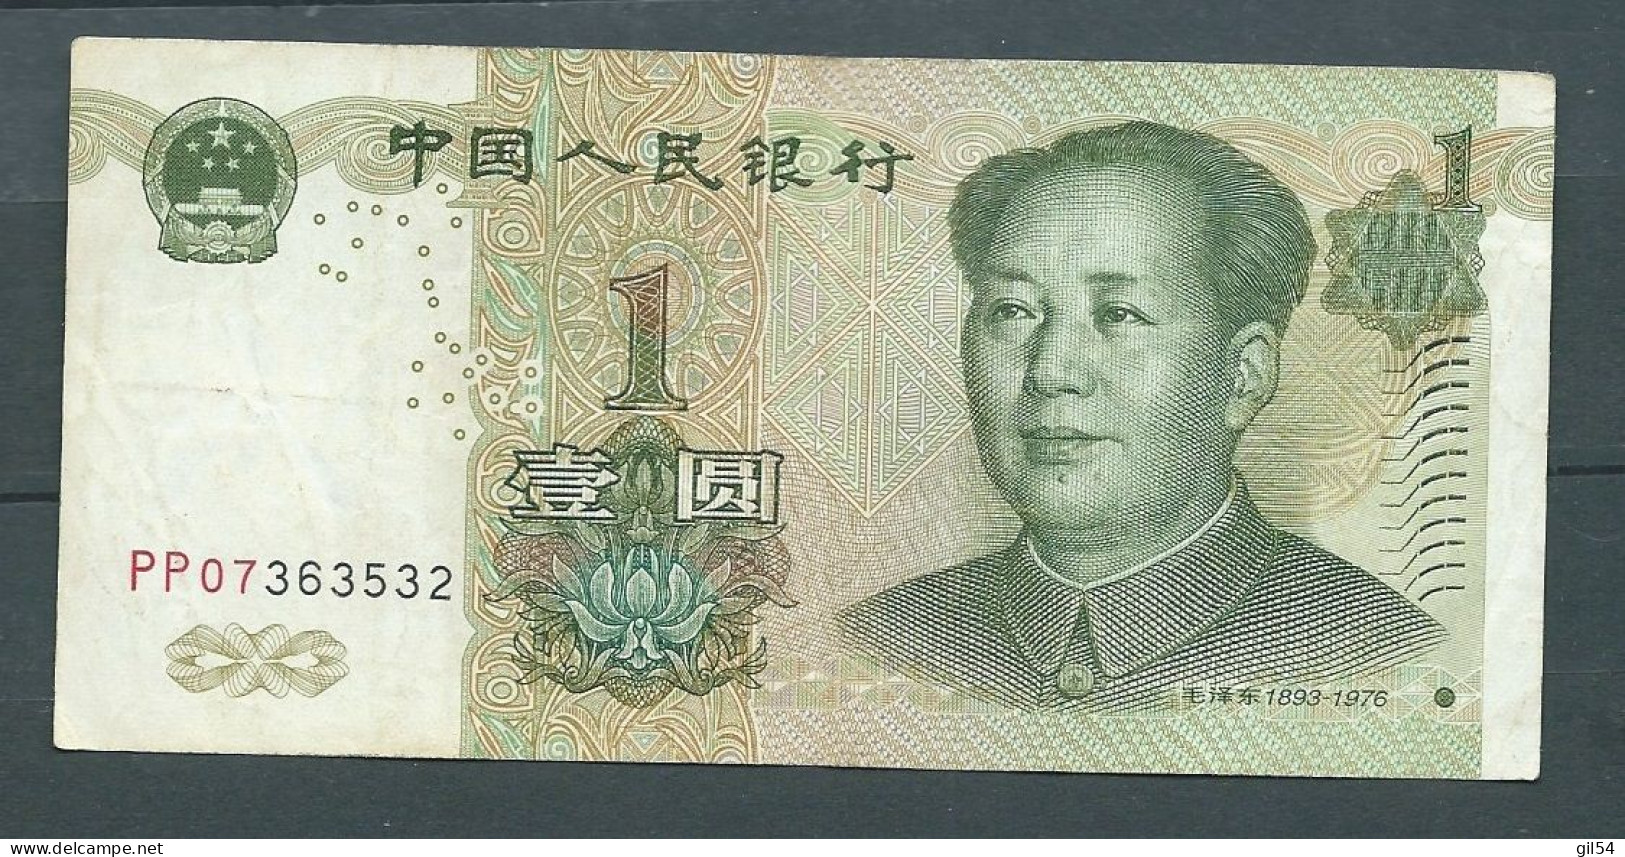 CHINE 1 YUAN 1999 -  PP07363532 - Laura 9329 - Cina